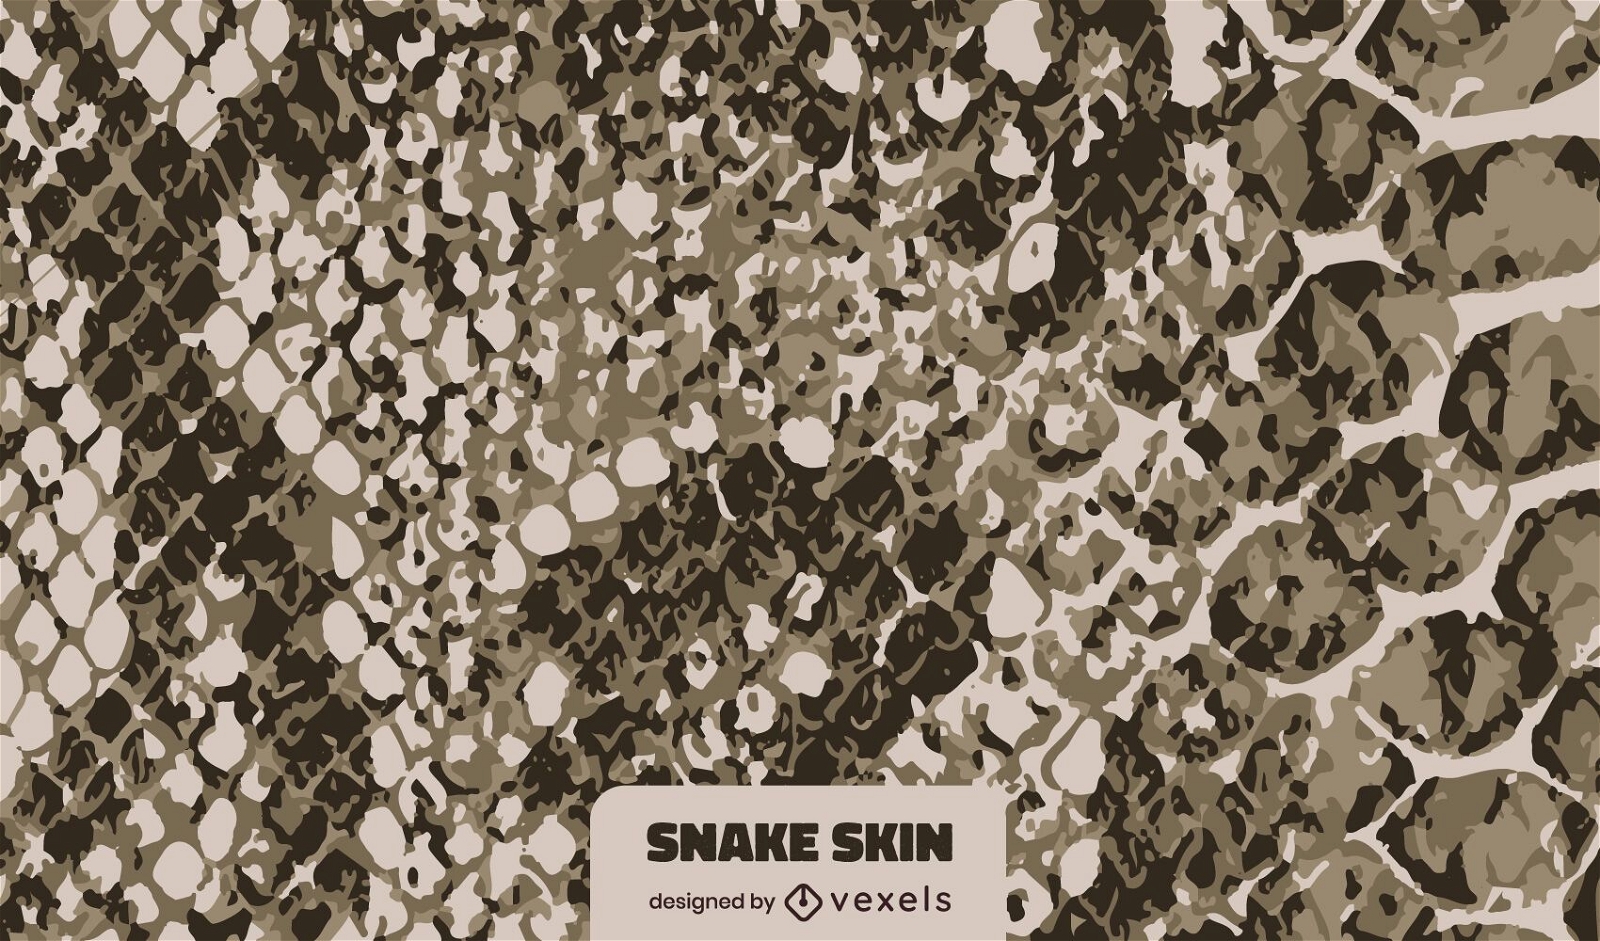 Earth-tone Snake Skin Texture